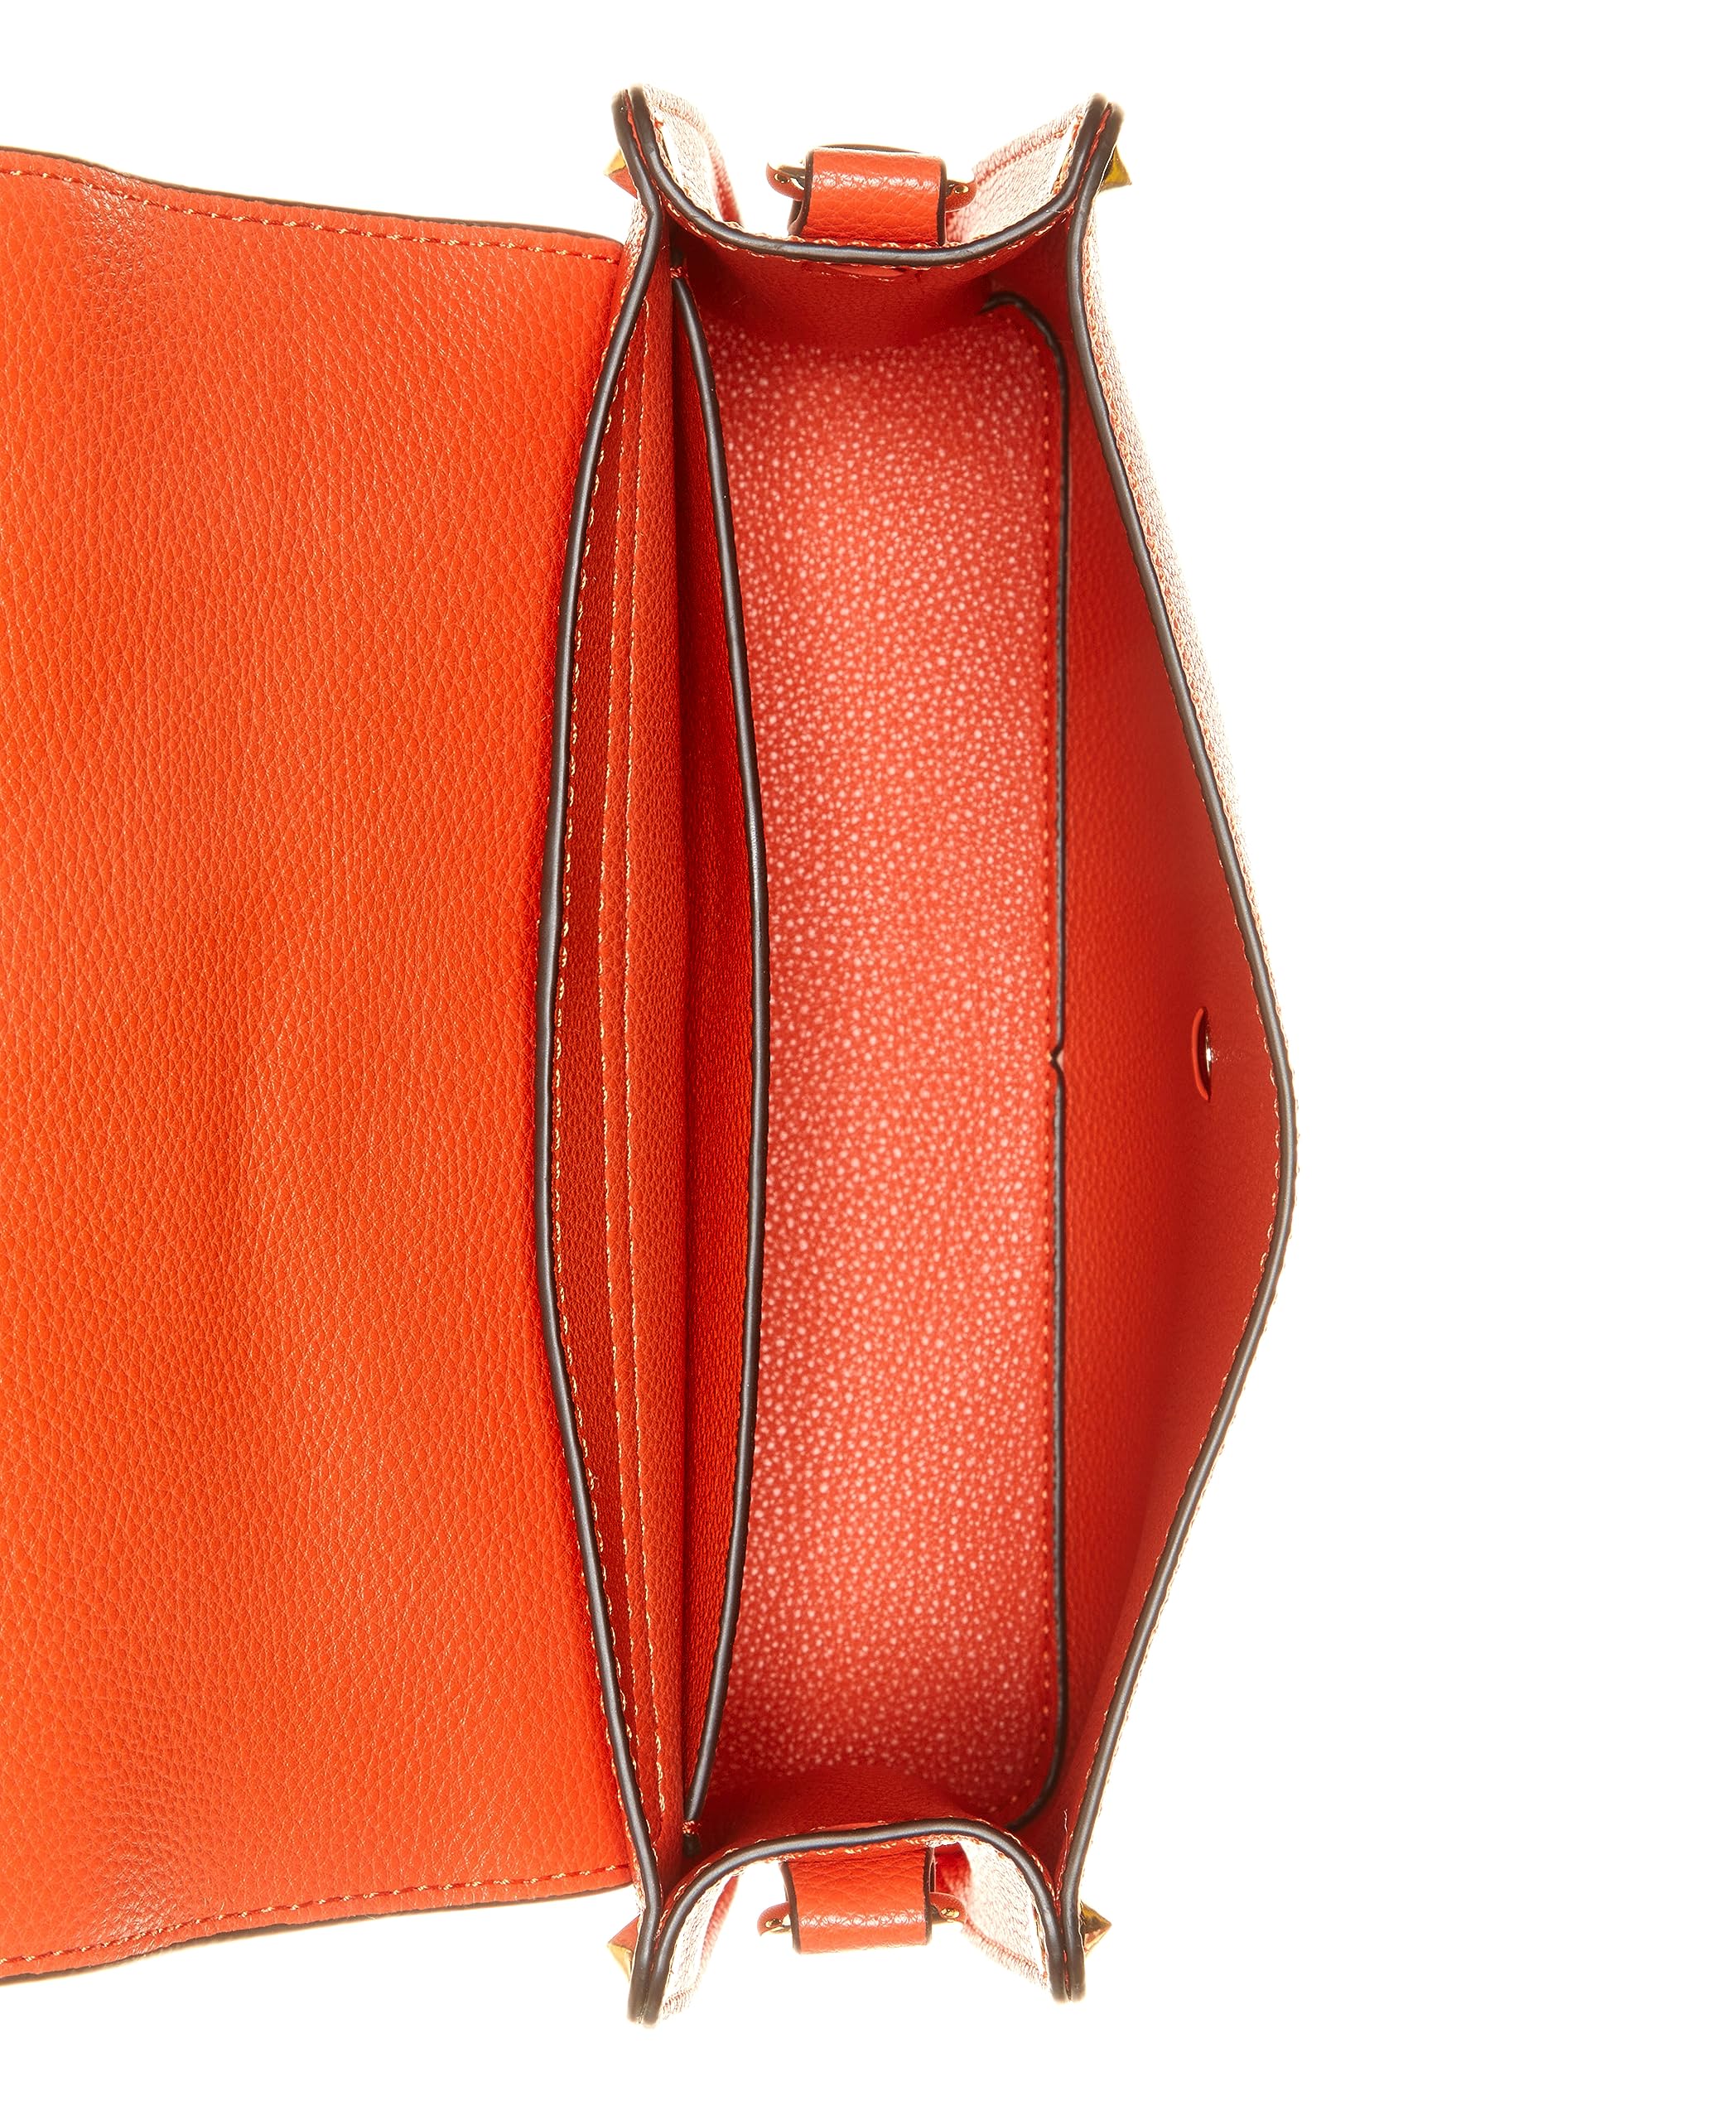 GUESS Meridian Flap Shoulder Bag